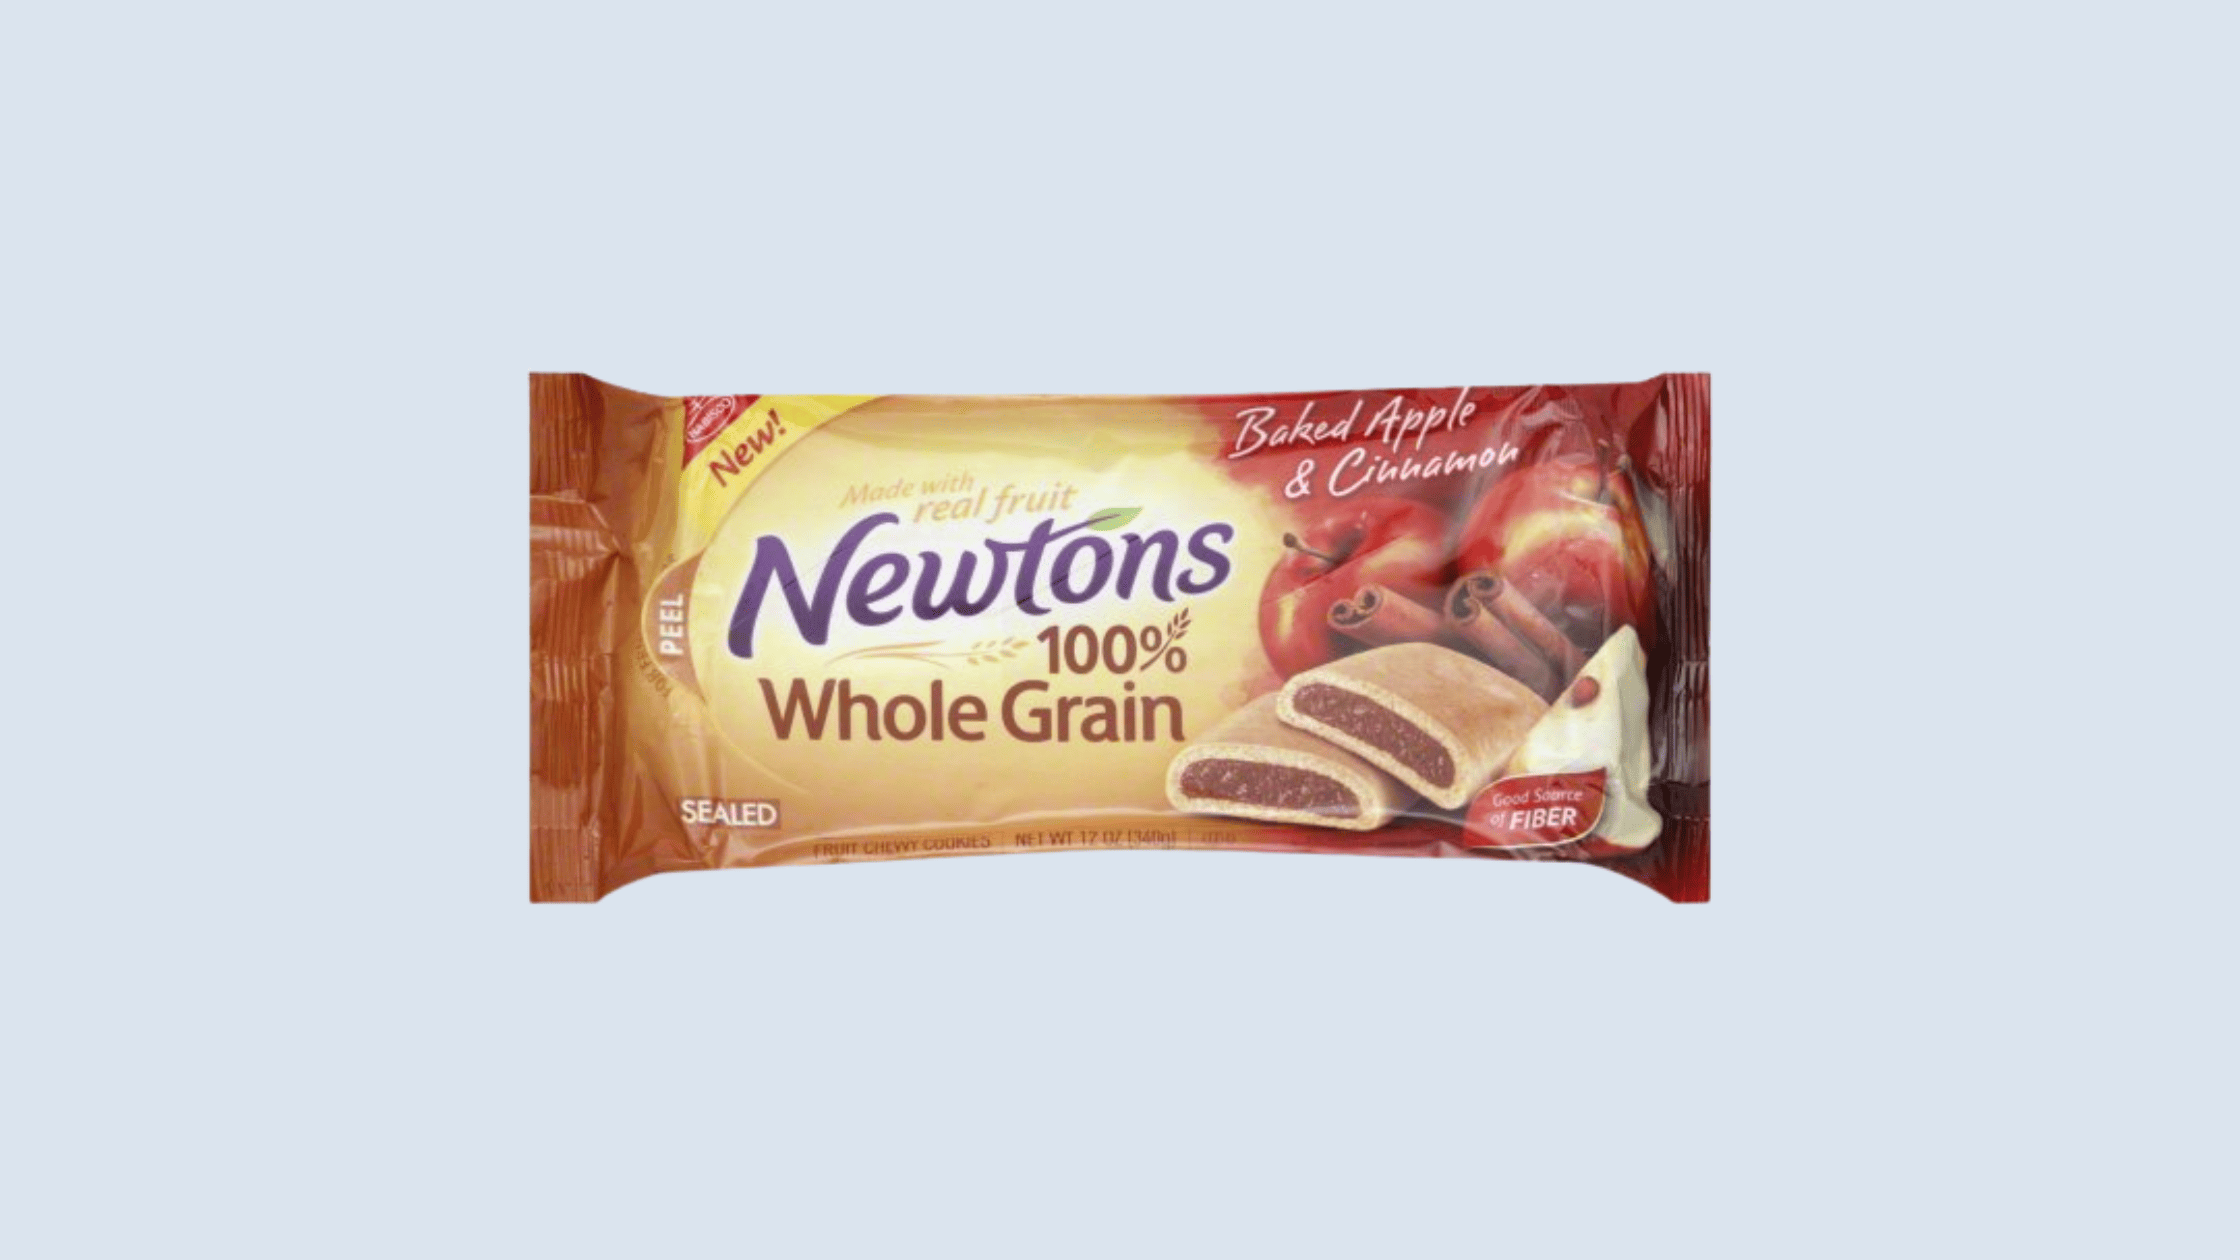 Newtons